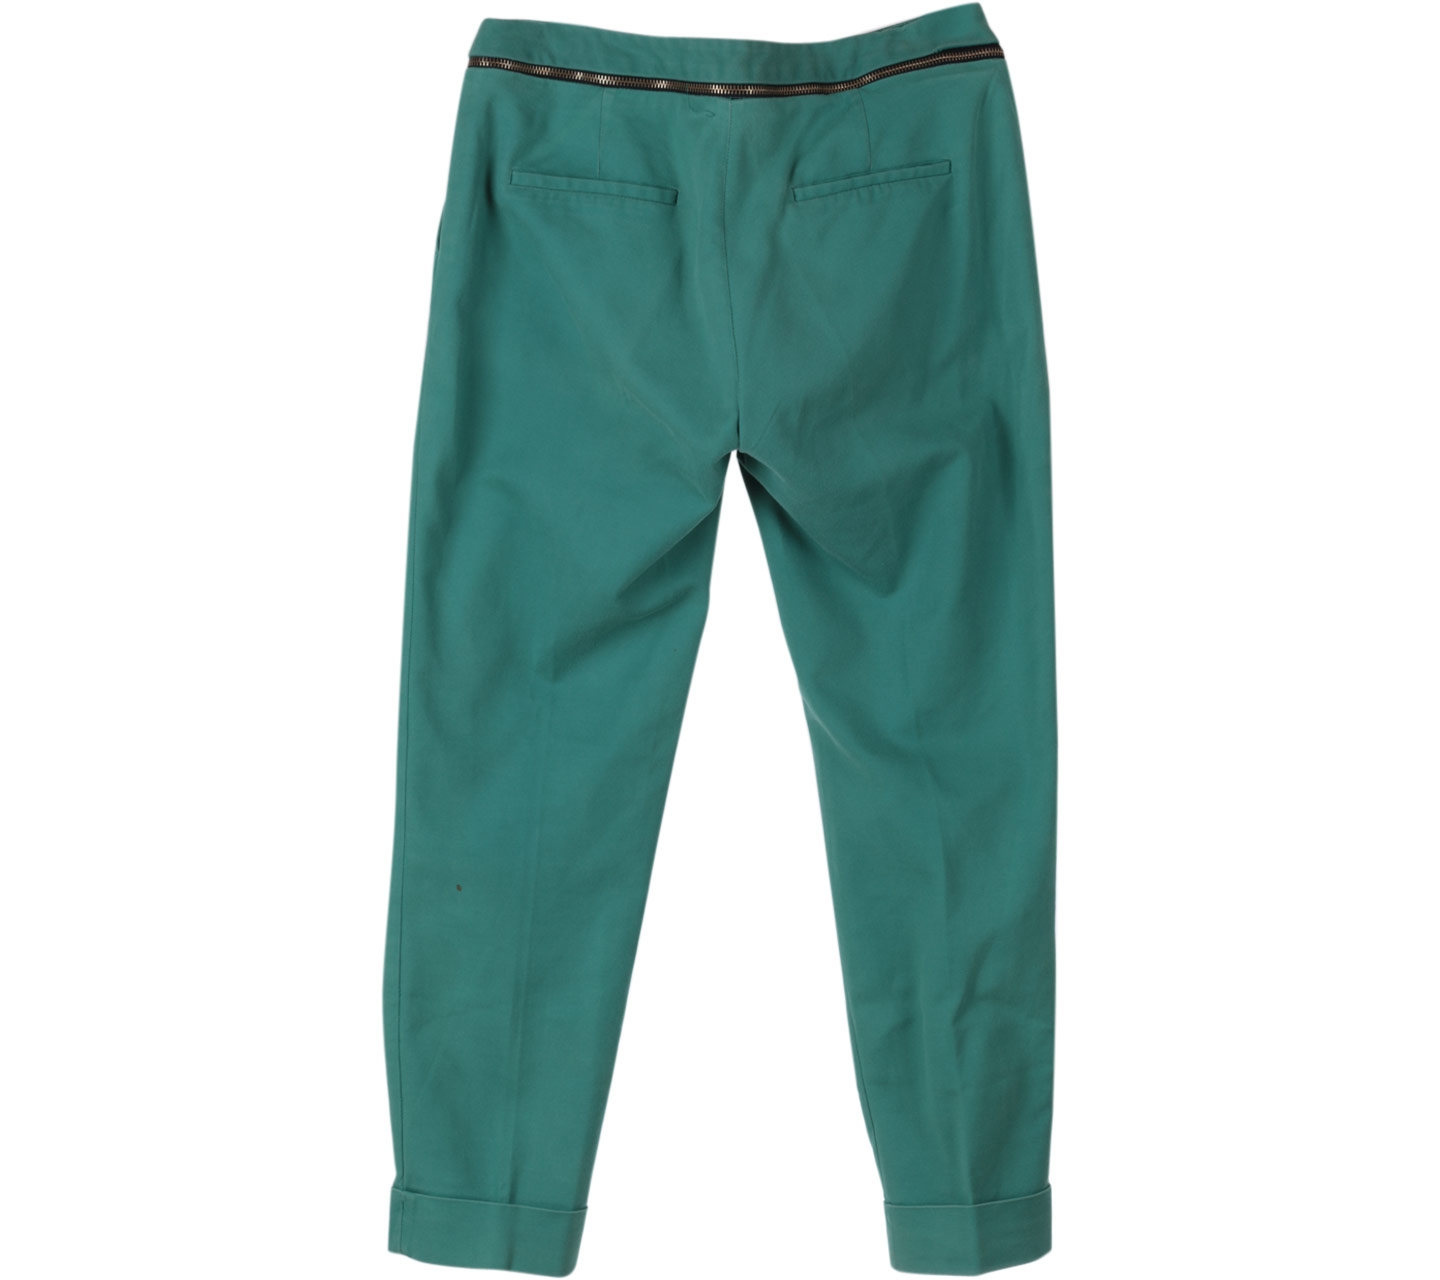 Zara Green Zipper Pants Pants